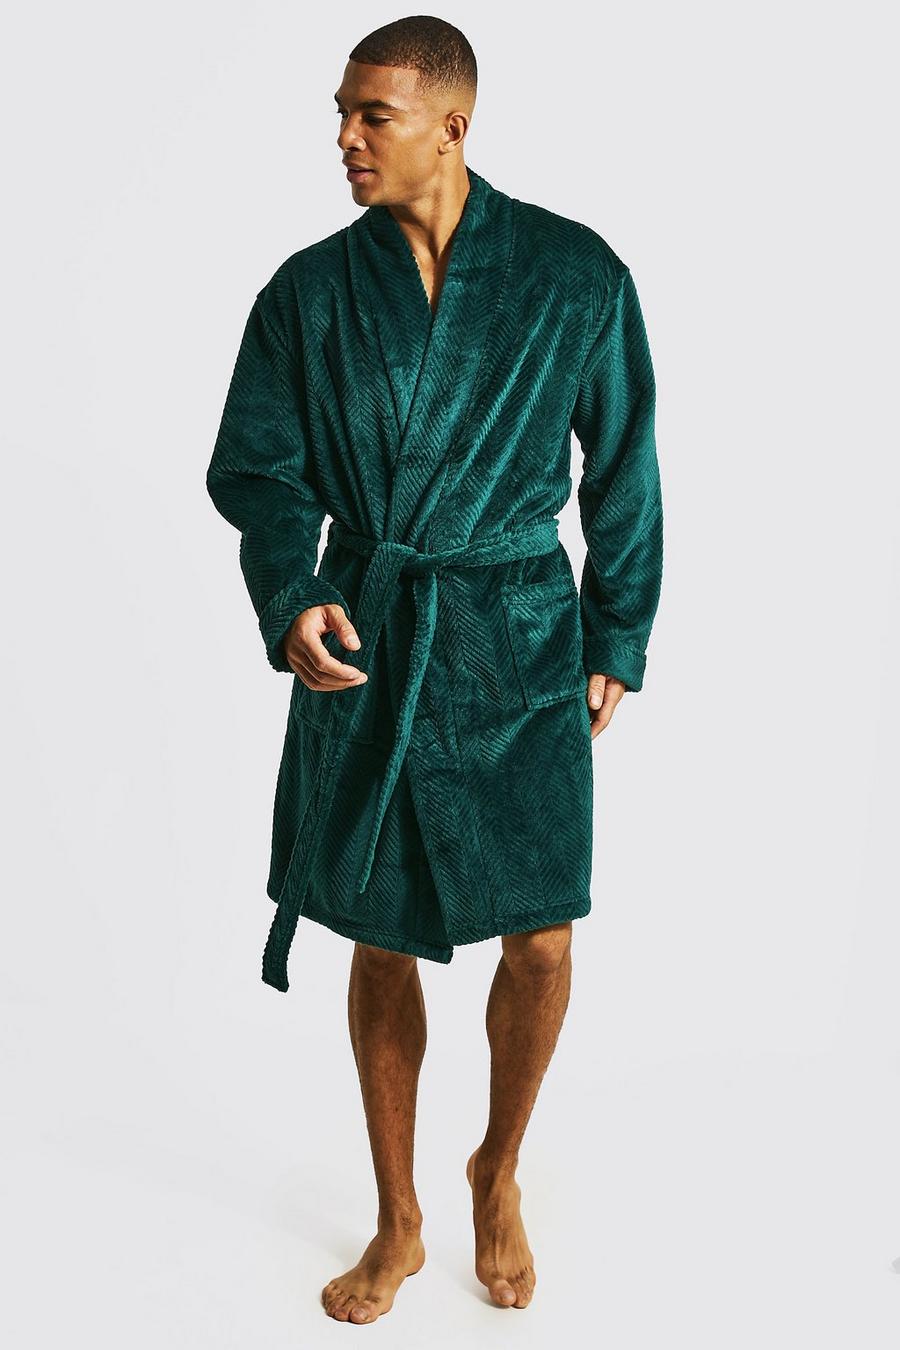 Strutkturierter Fleece Kimono-Morgenmantel, Forest green image number 1